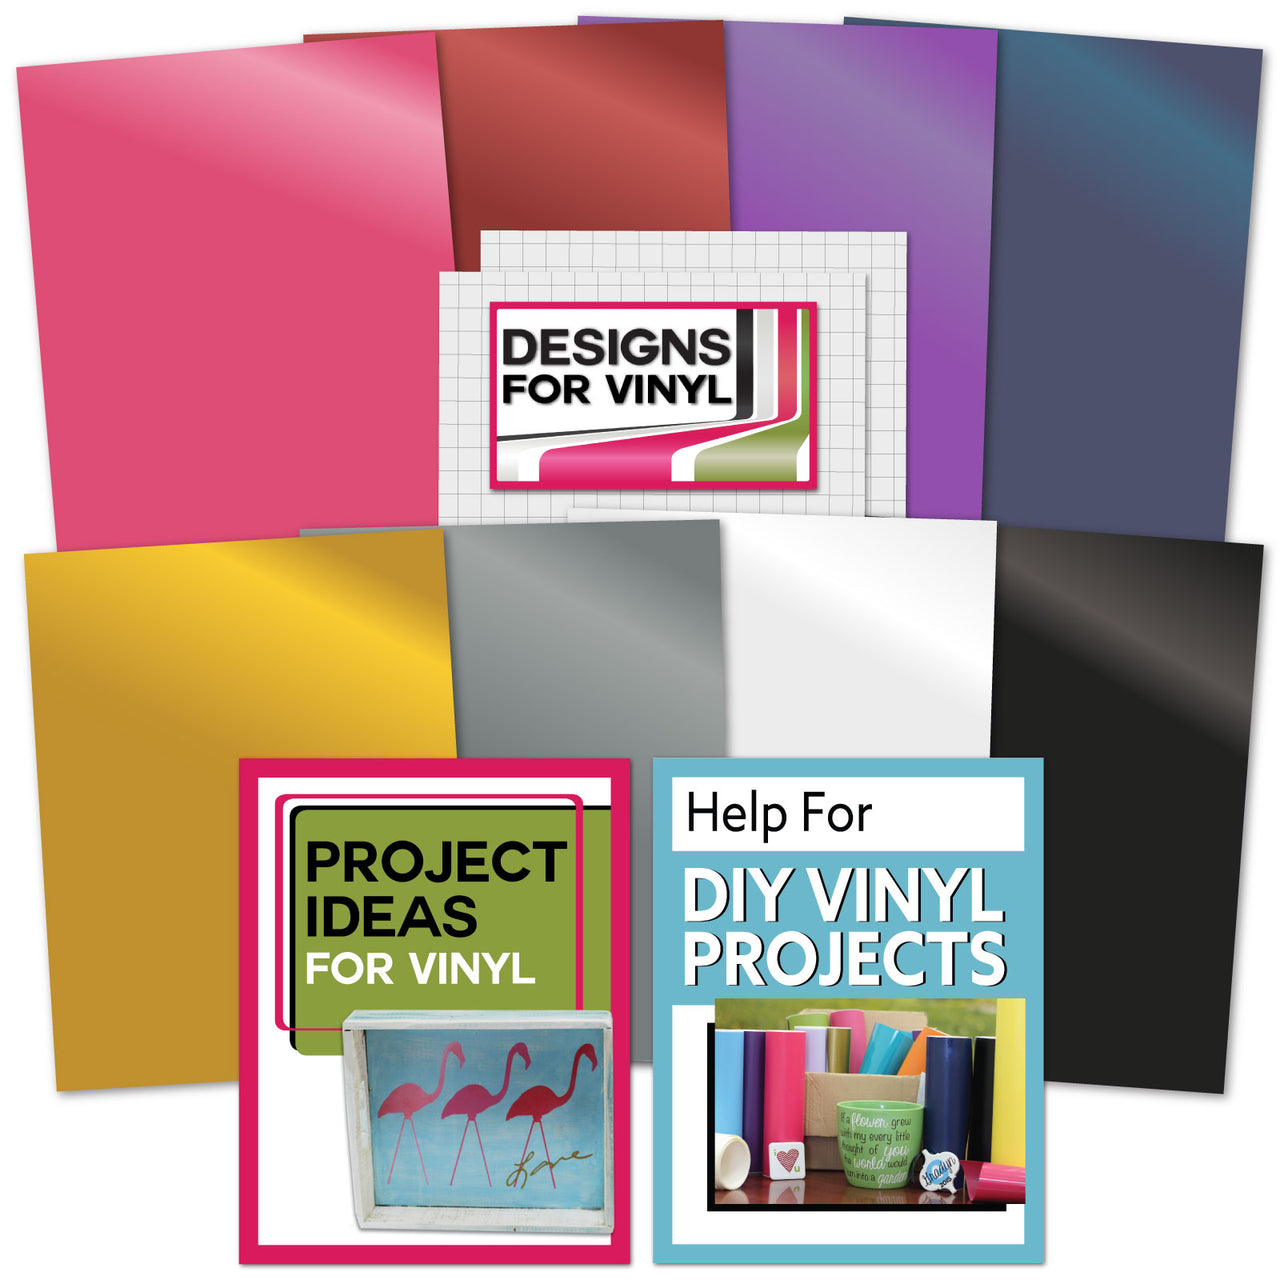 Cricut Beginner Bundle- Glitter Iron On HTV, Vinyl Sheets, Tool Kit, Pens, eBook